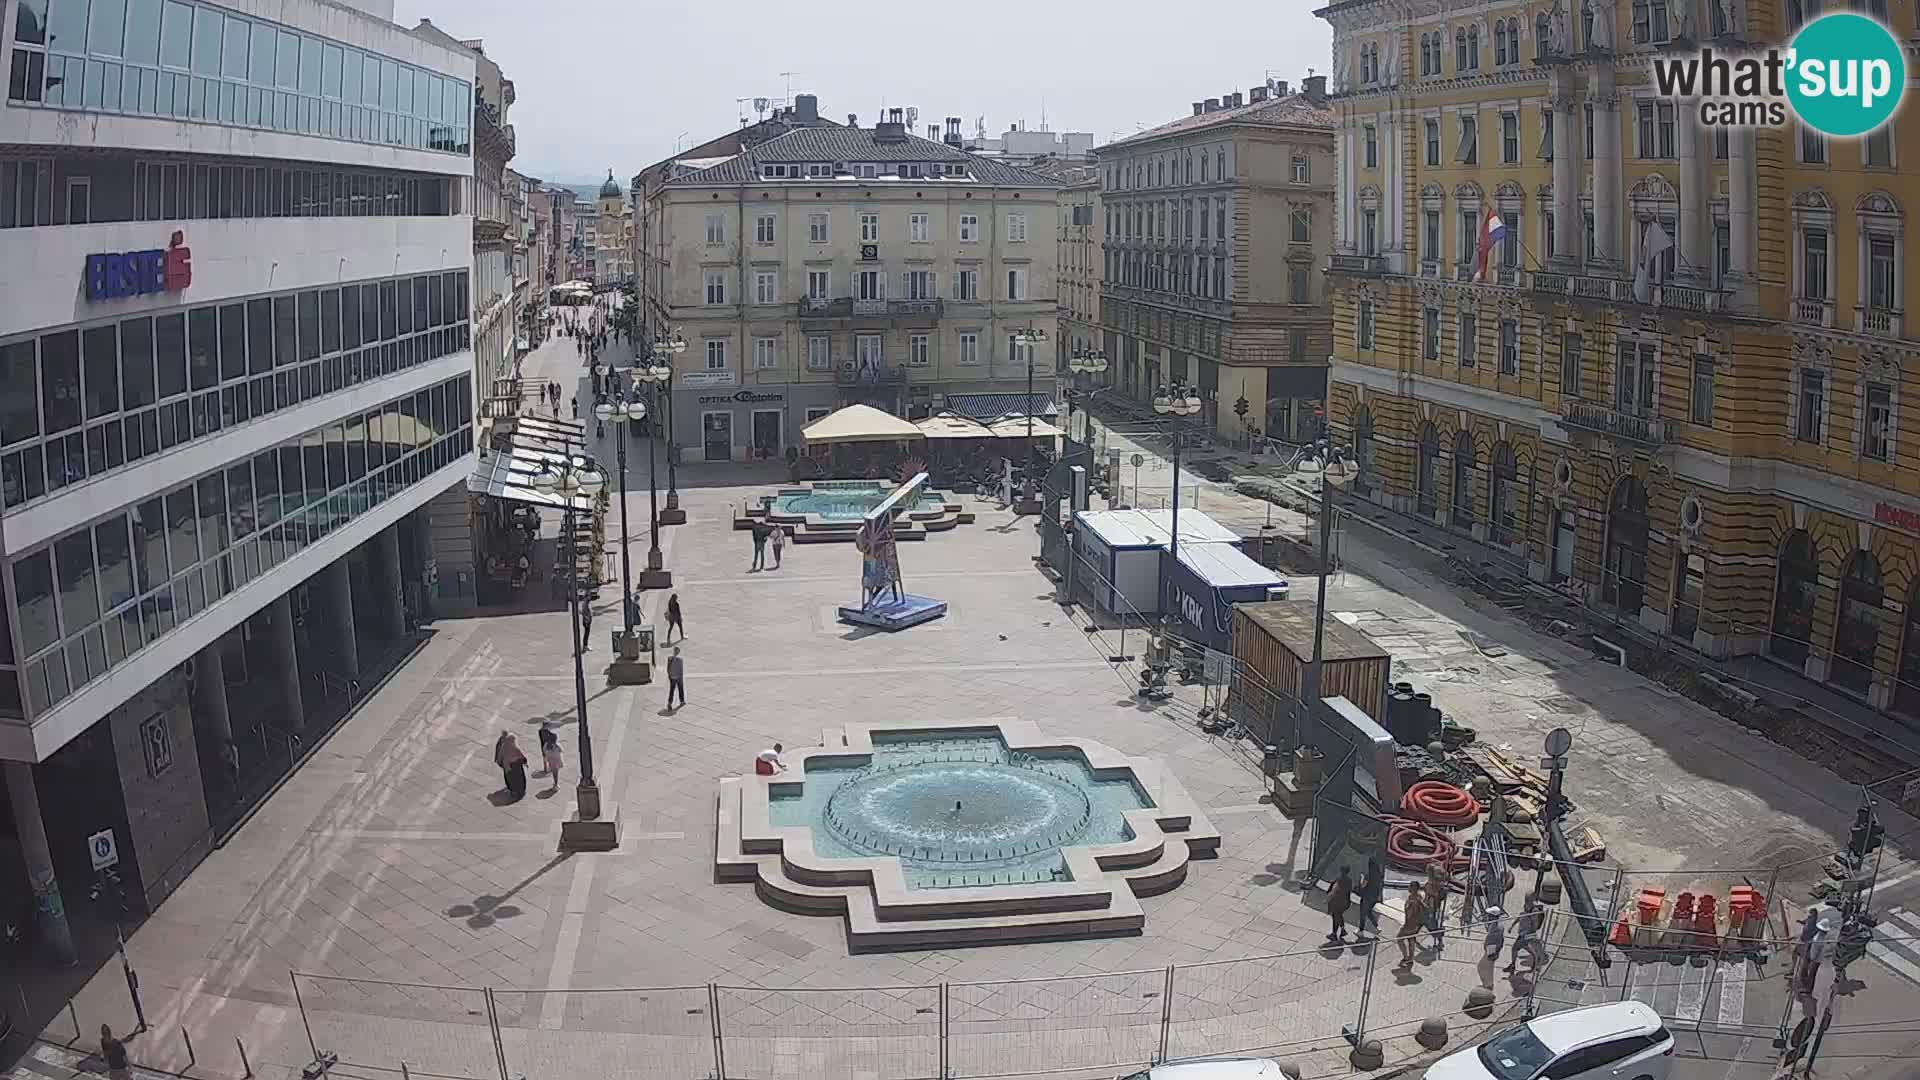 Reka – Jadranski trg